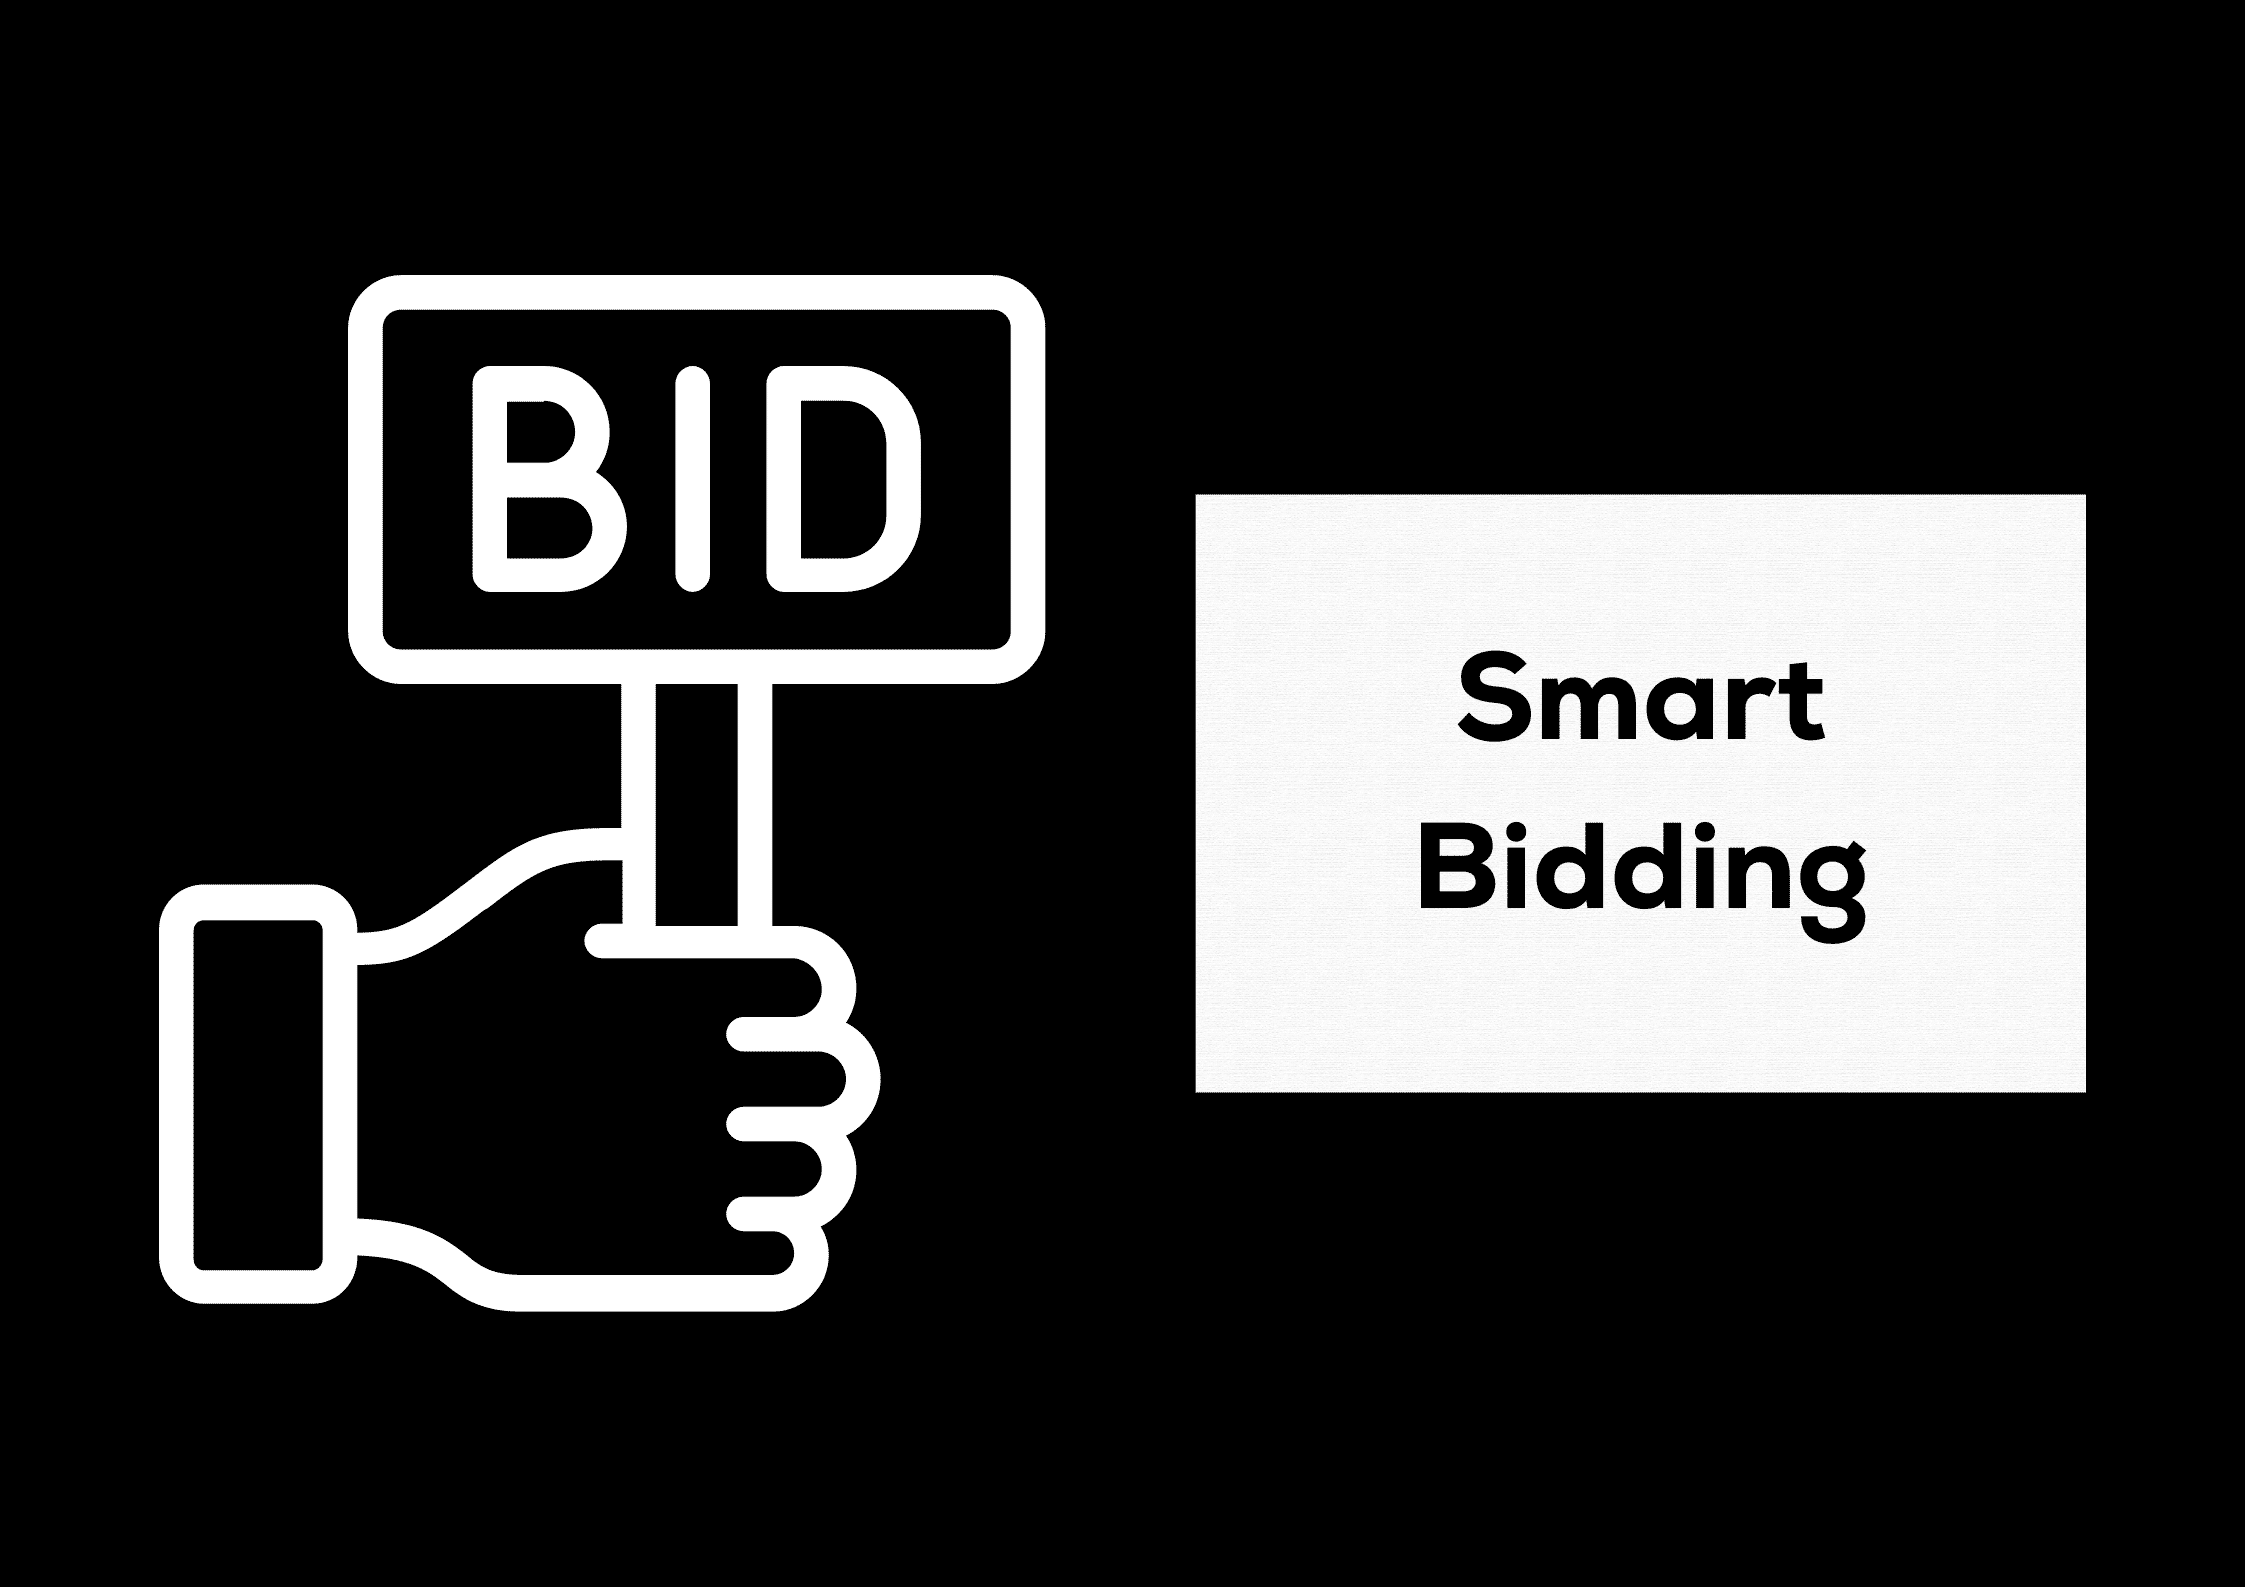 Smart bidding